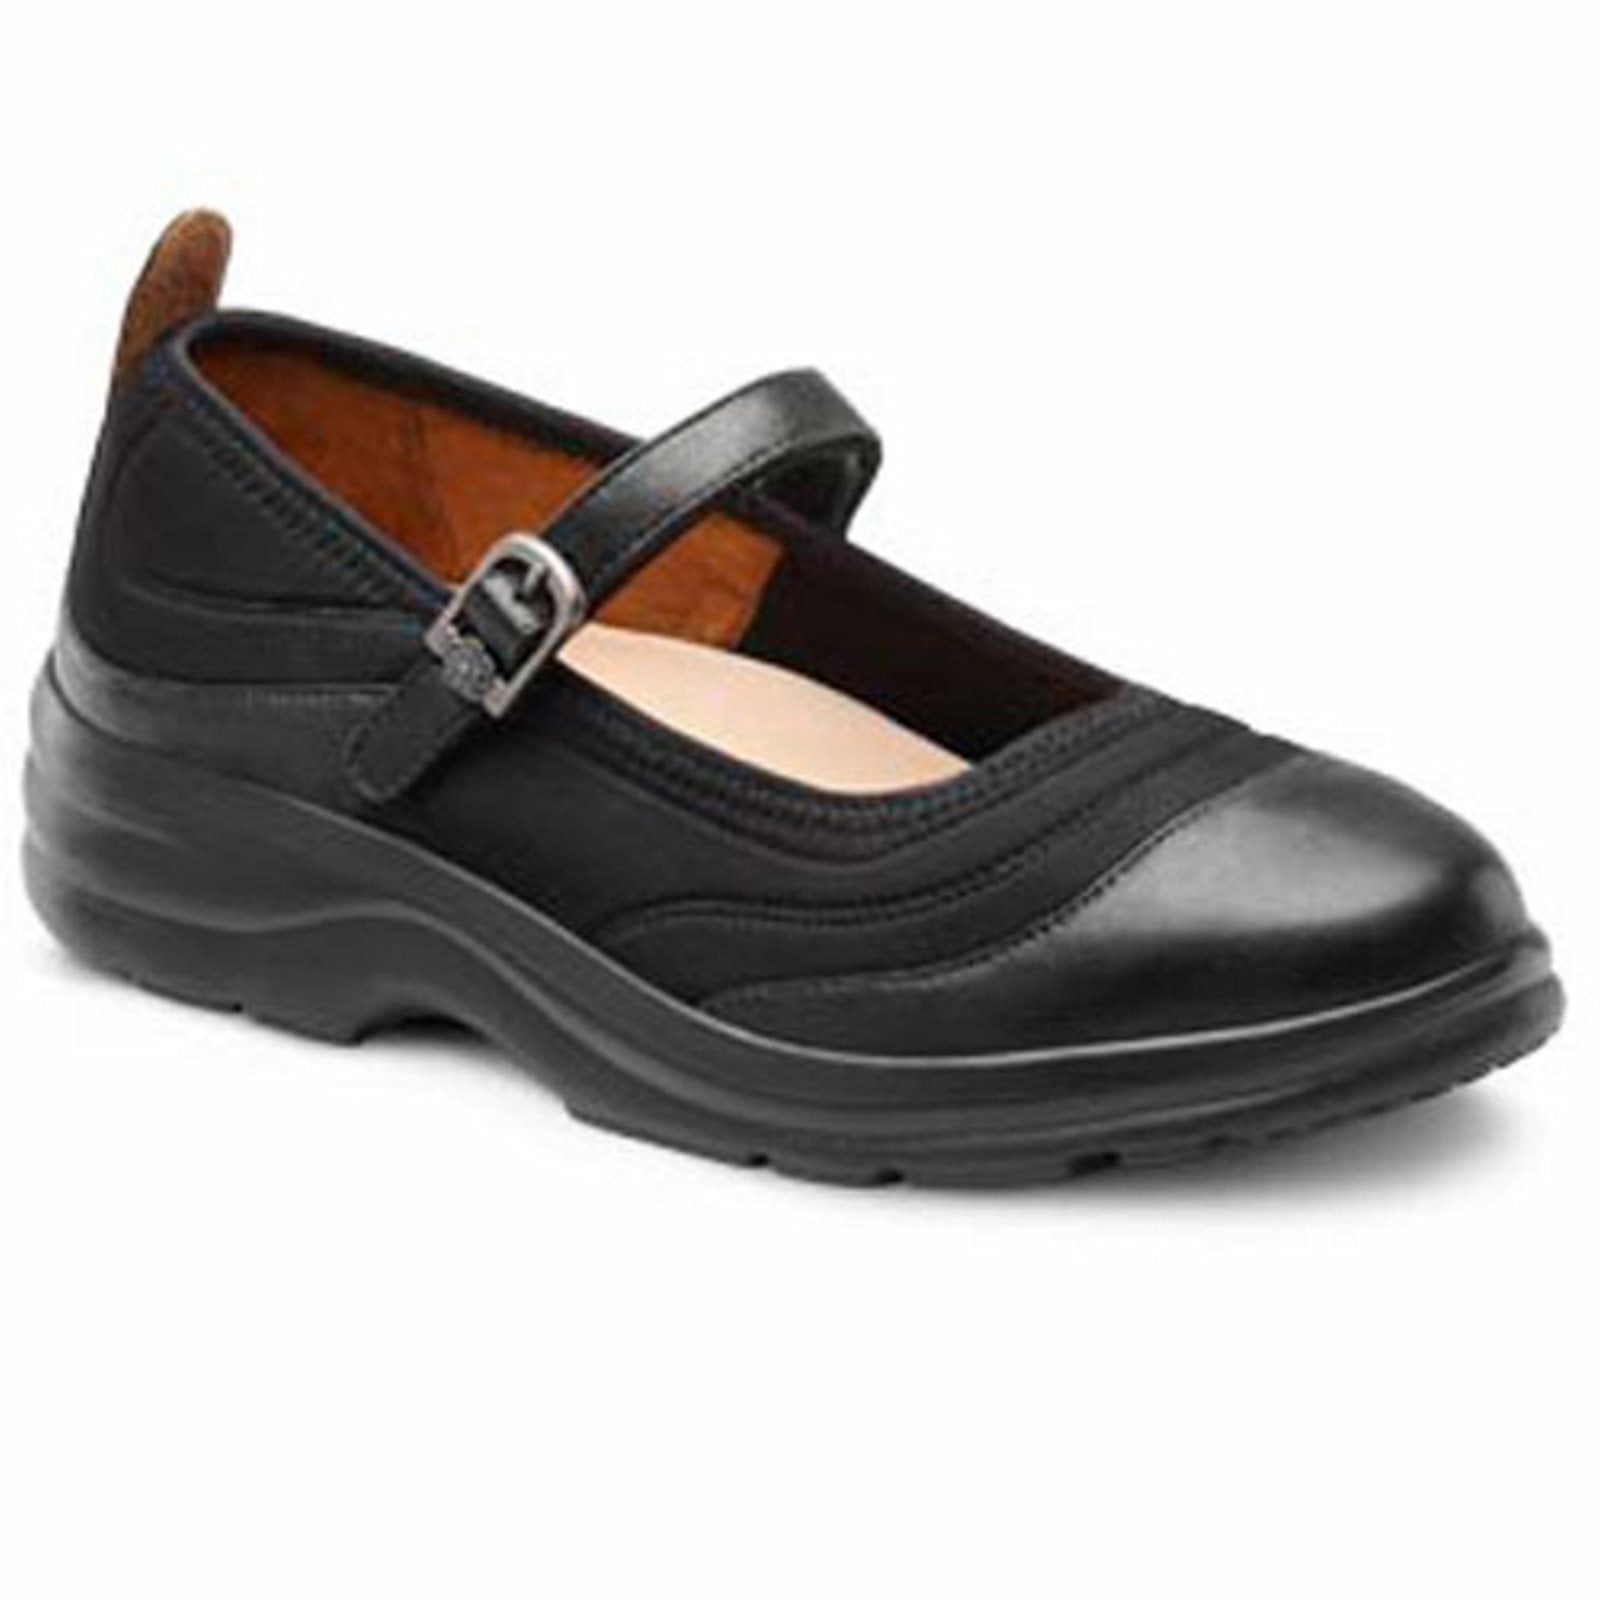 11 narrow womens shoes